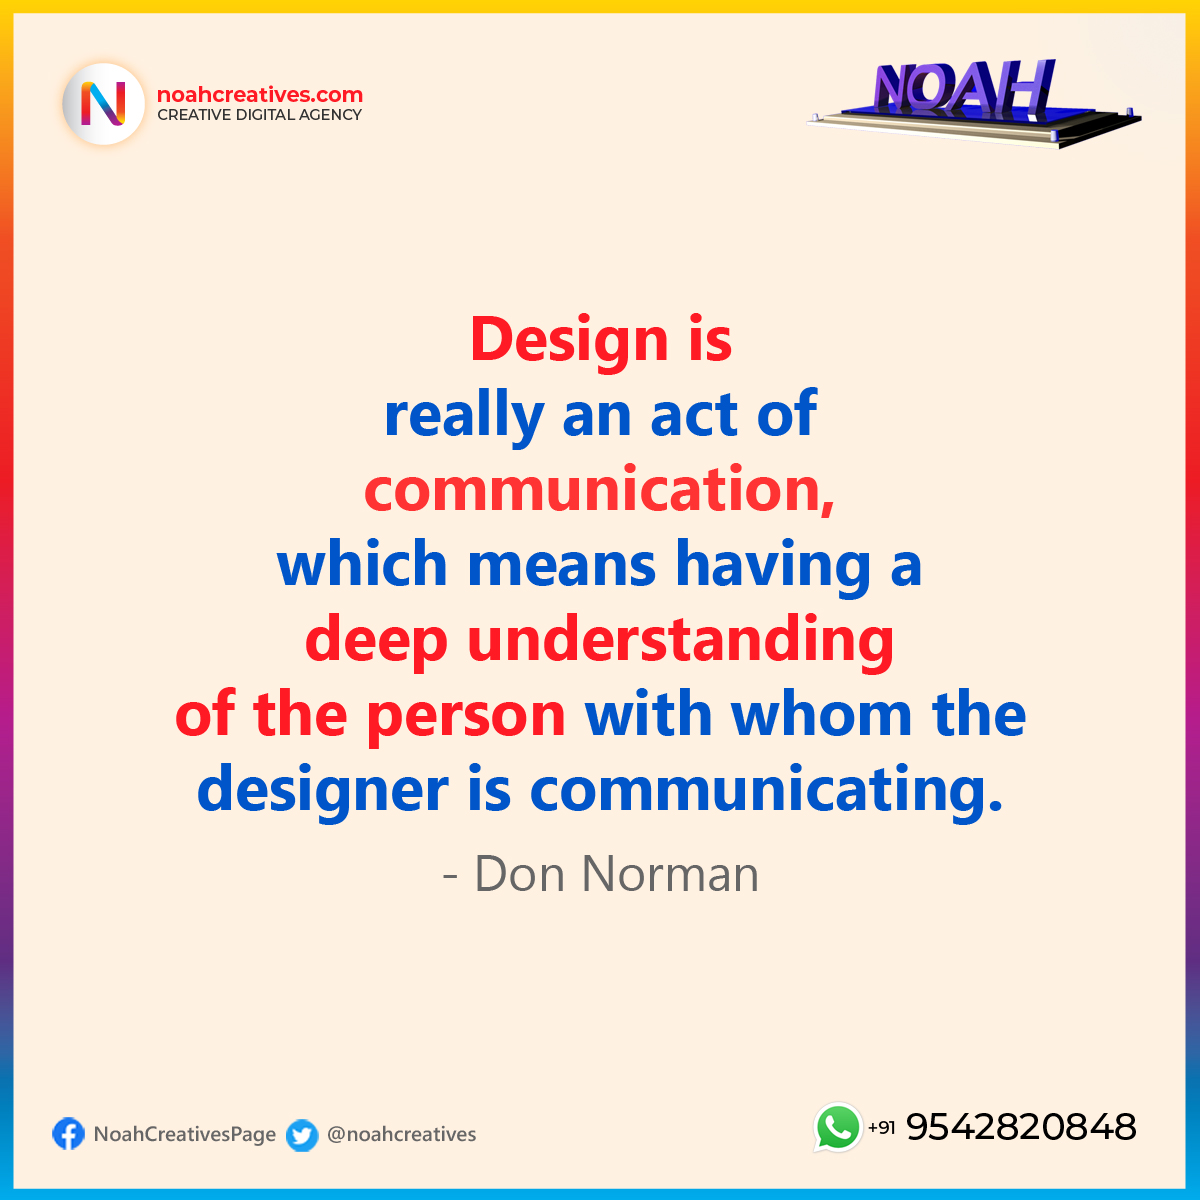 #Design
#Communication
#Understanding
#Designer
#DonNorman
#Quote